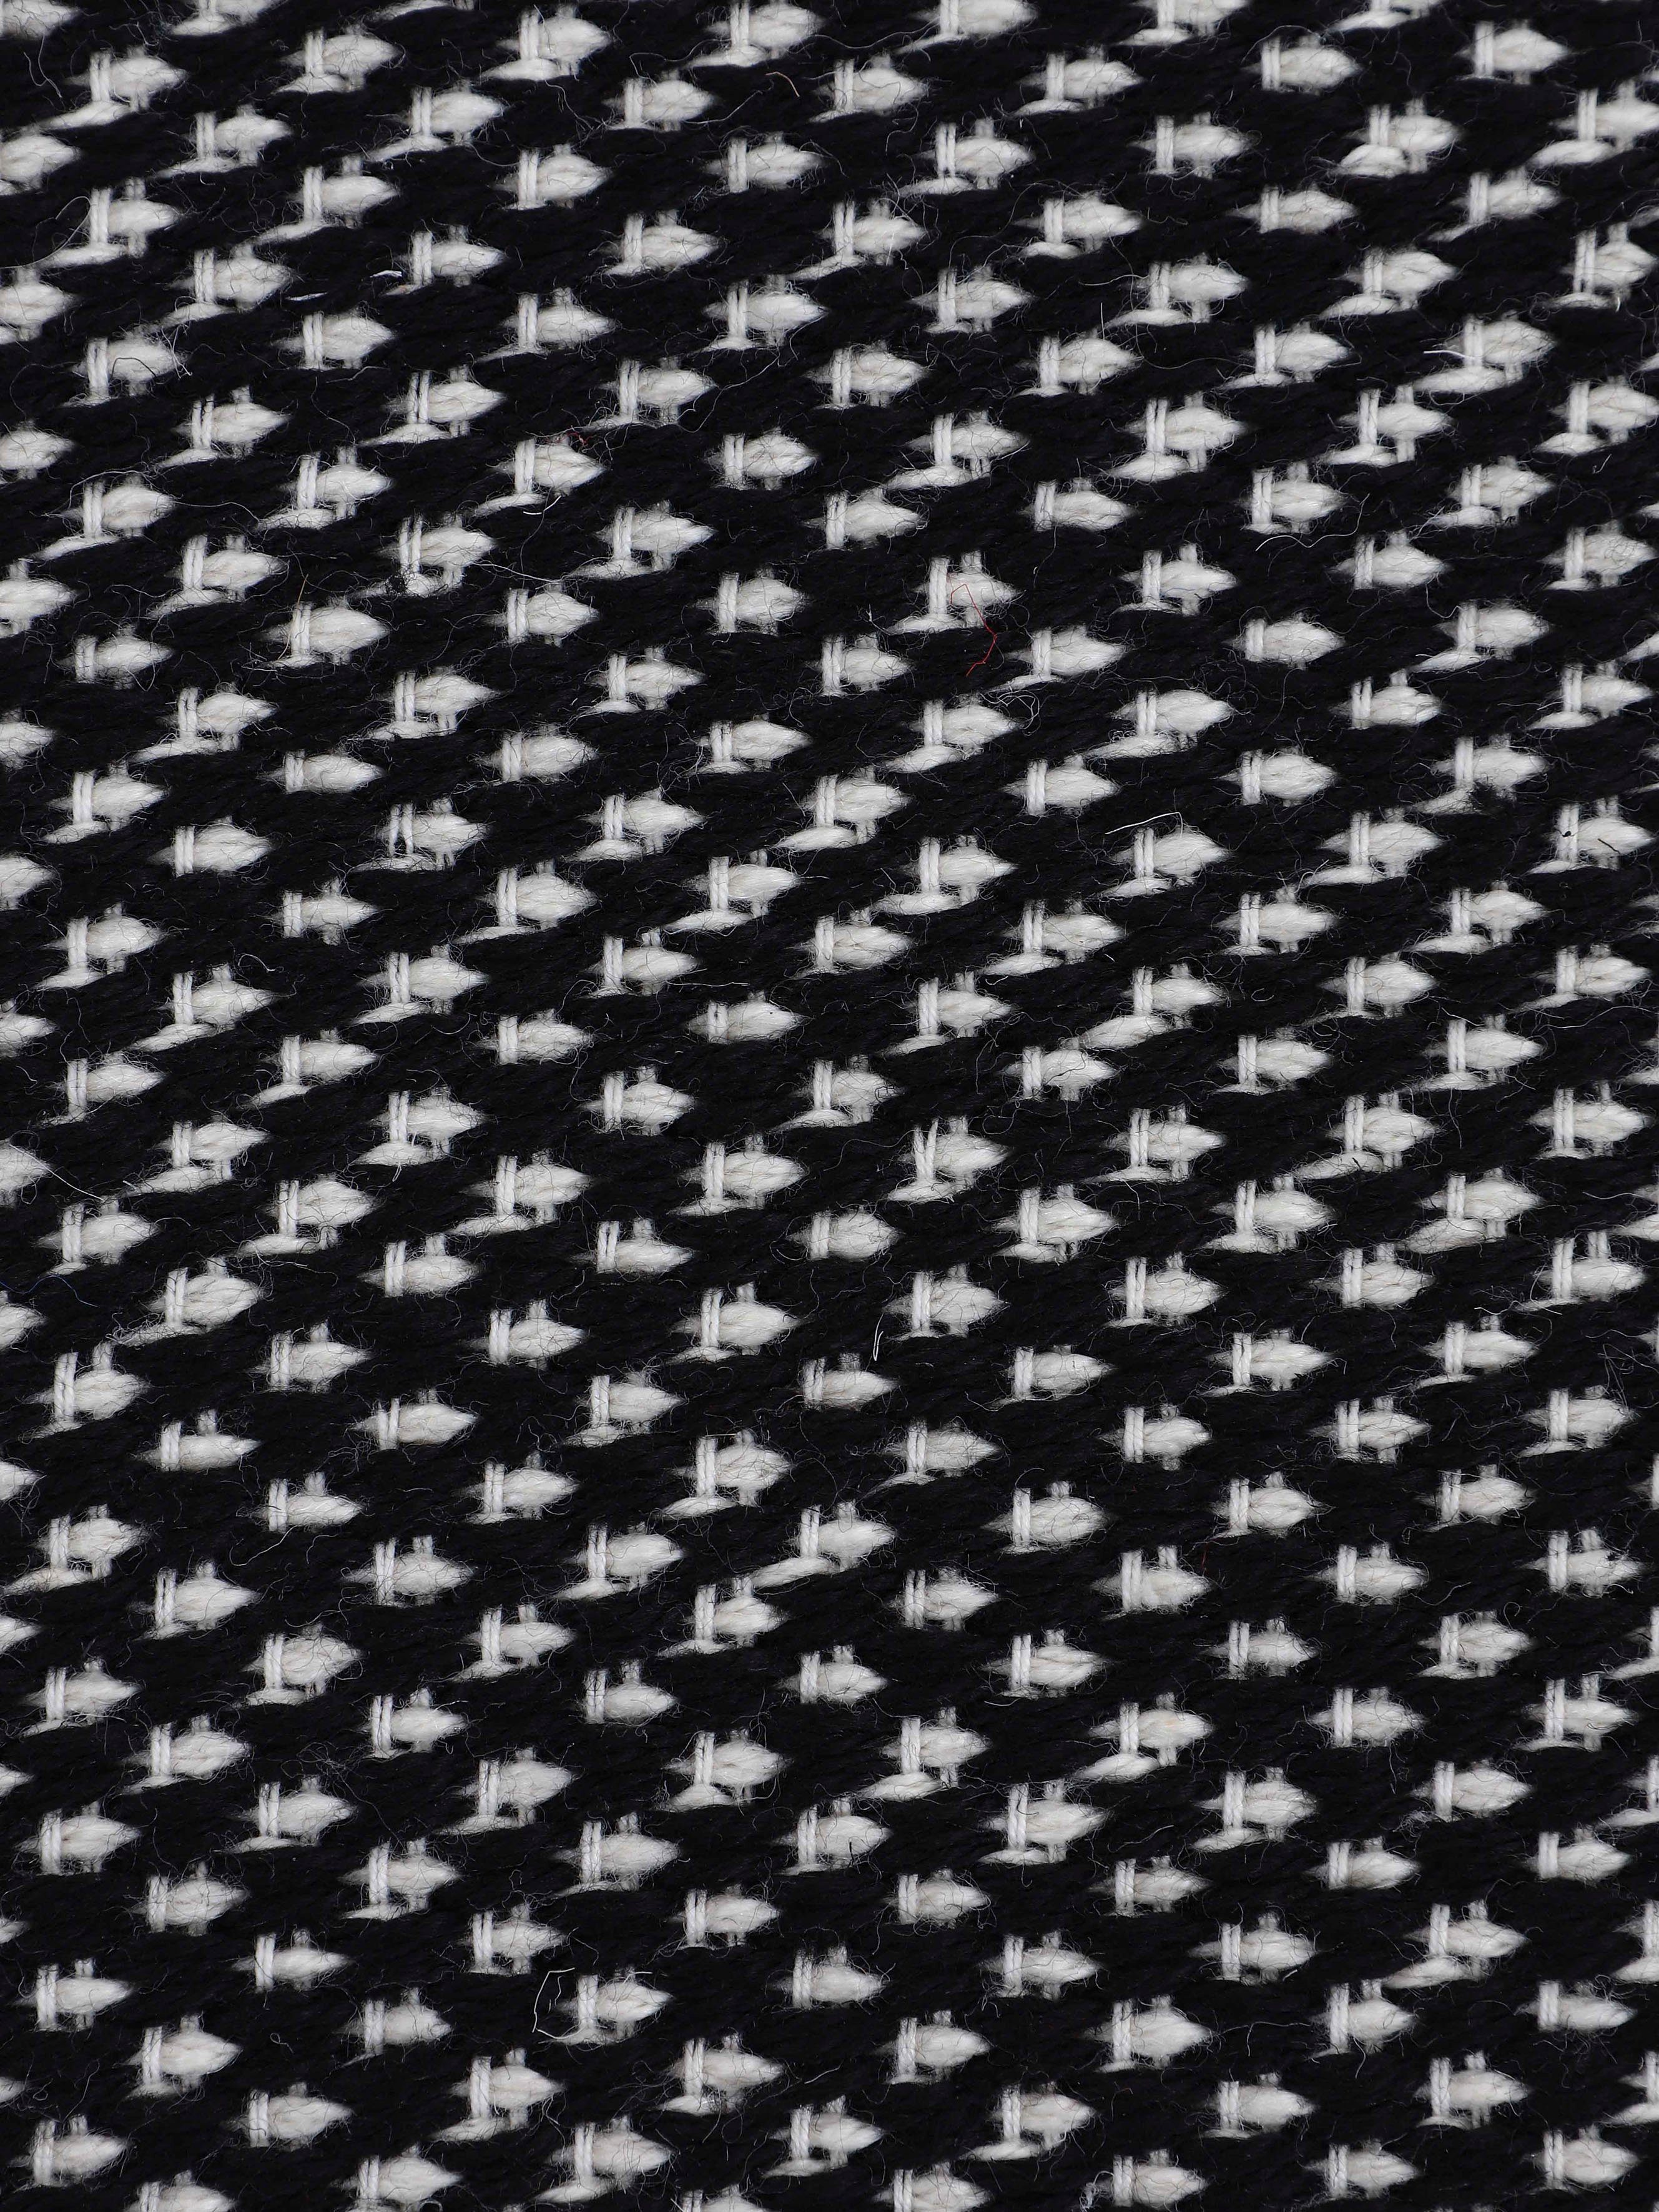 Teppich Frida Flachgewebe, Material 100% (PET), rechteckig, recyceltem Höhe: carpetfine, Wendeteppich, Sisal mm, 7 schwarz 205, Optik